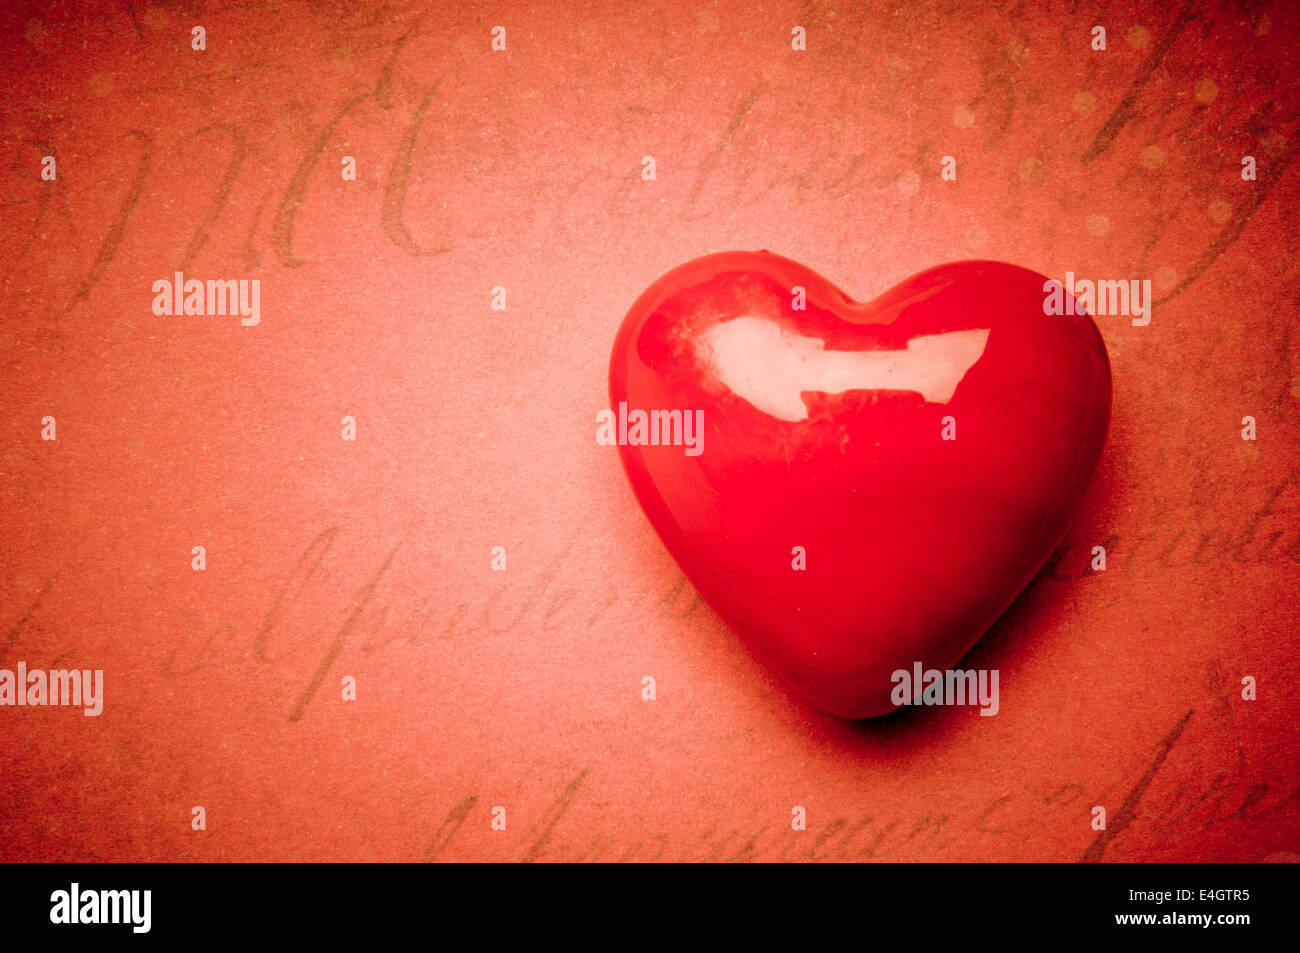 heart shape, love concept Stock Photo